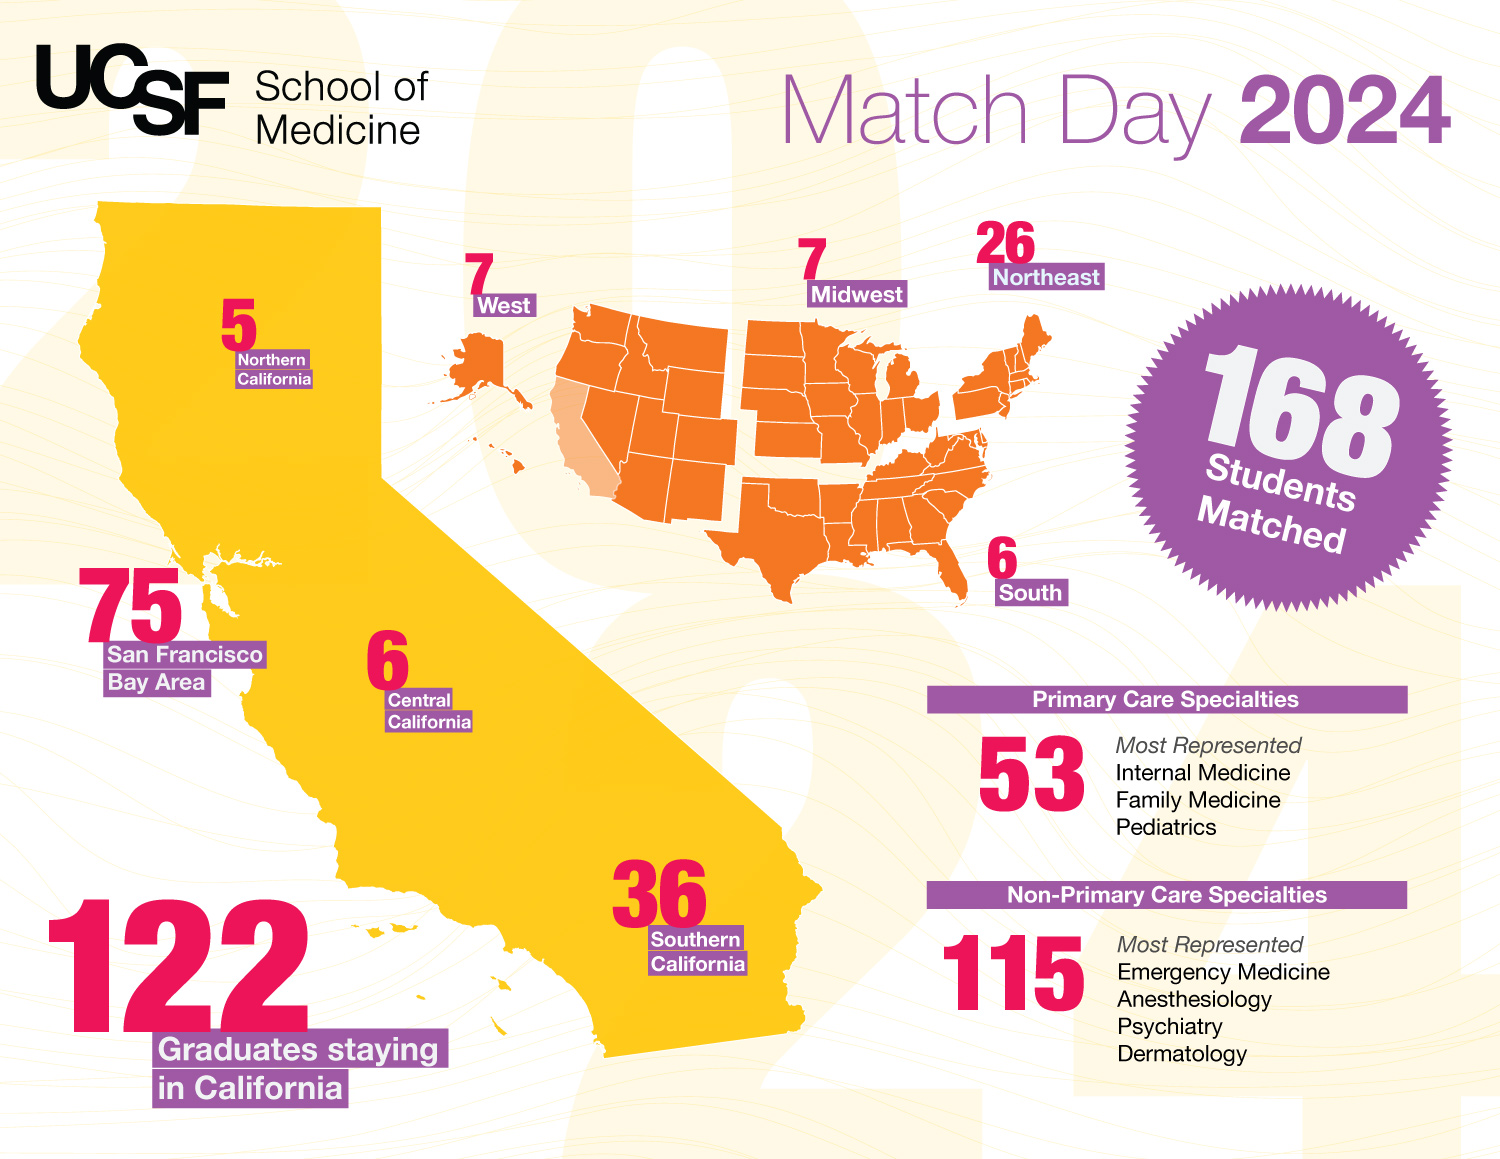 UCSF School of Medicine Match Day 2024 Statistics